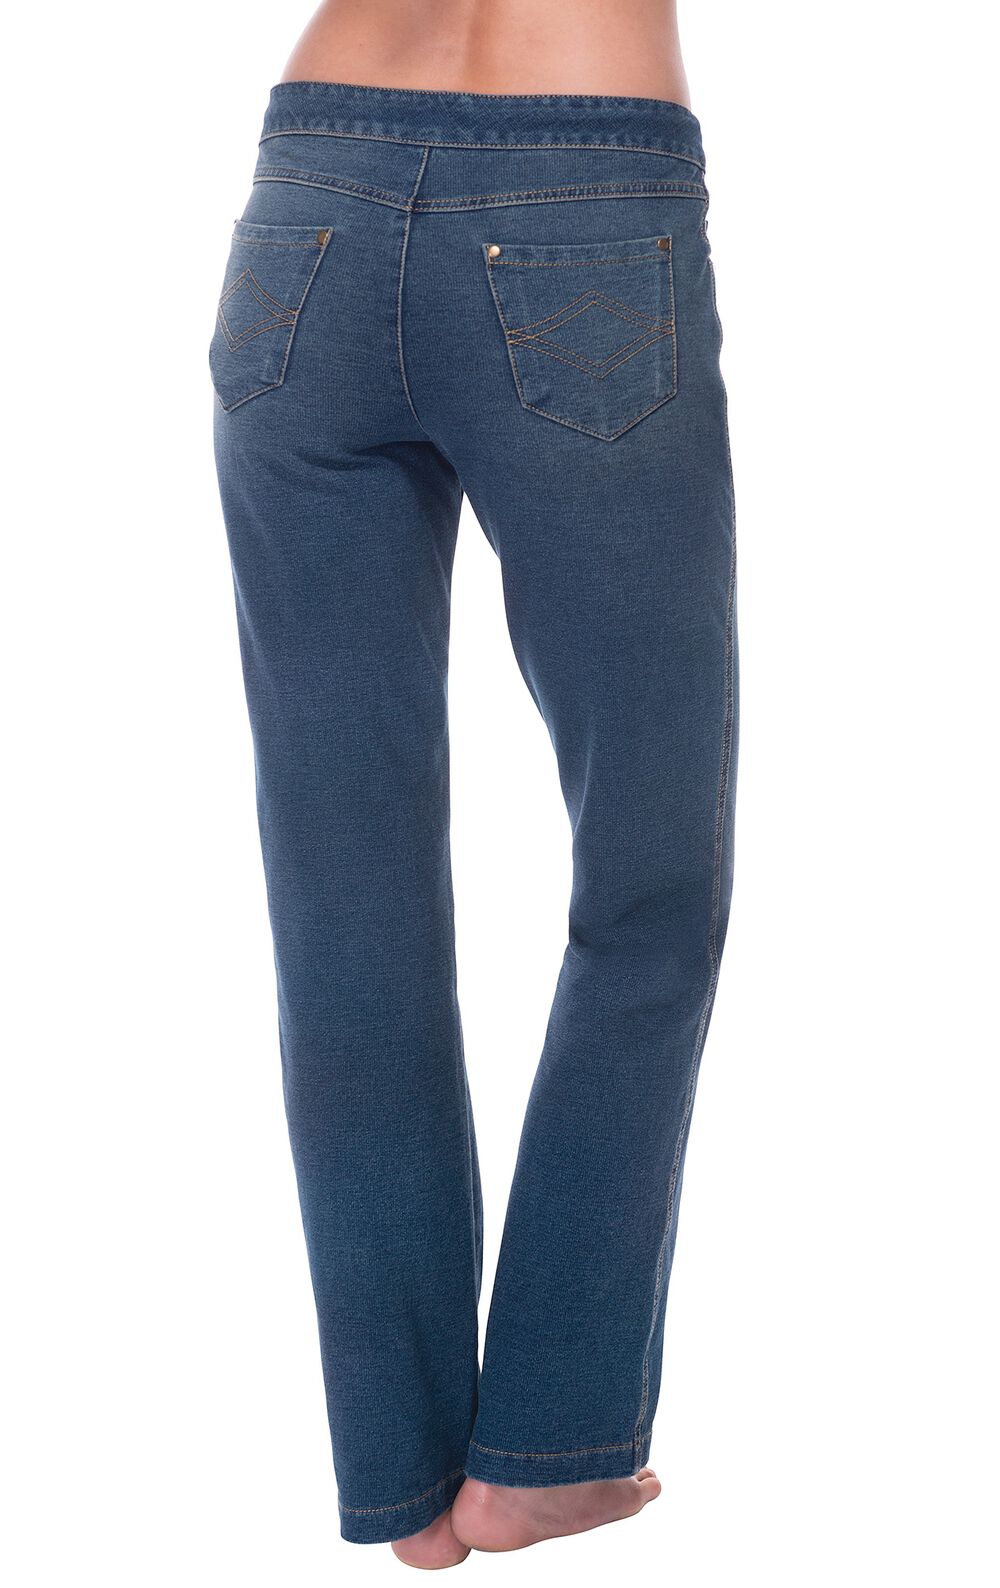 PajamaJeans Womens Bootcut Stretch Knit Denim Jeans 